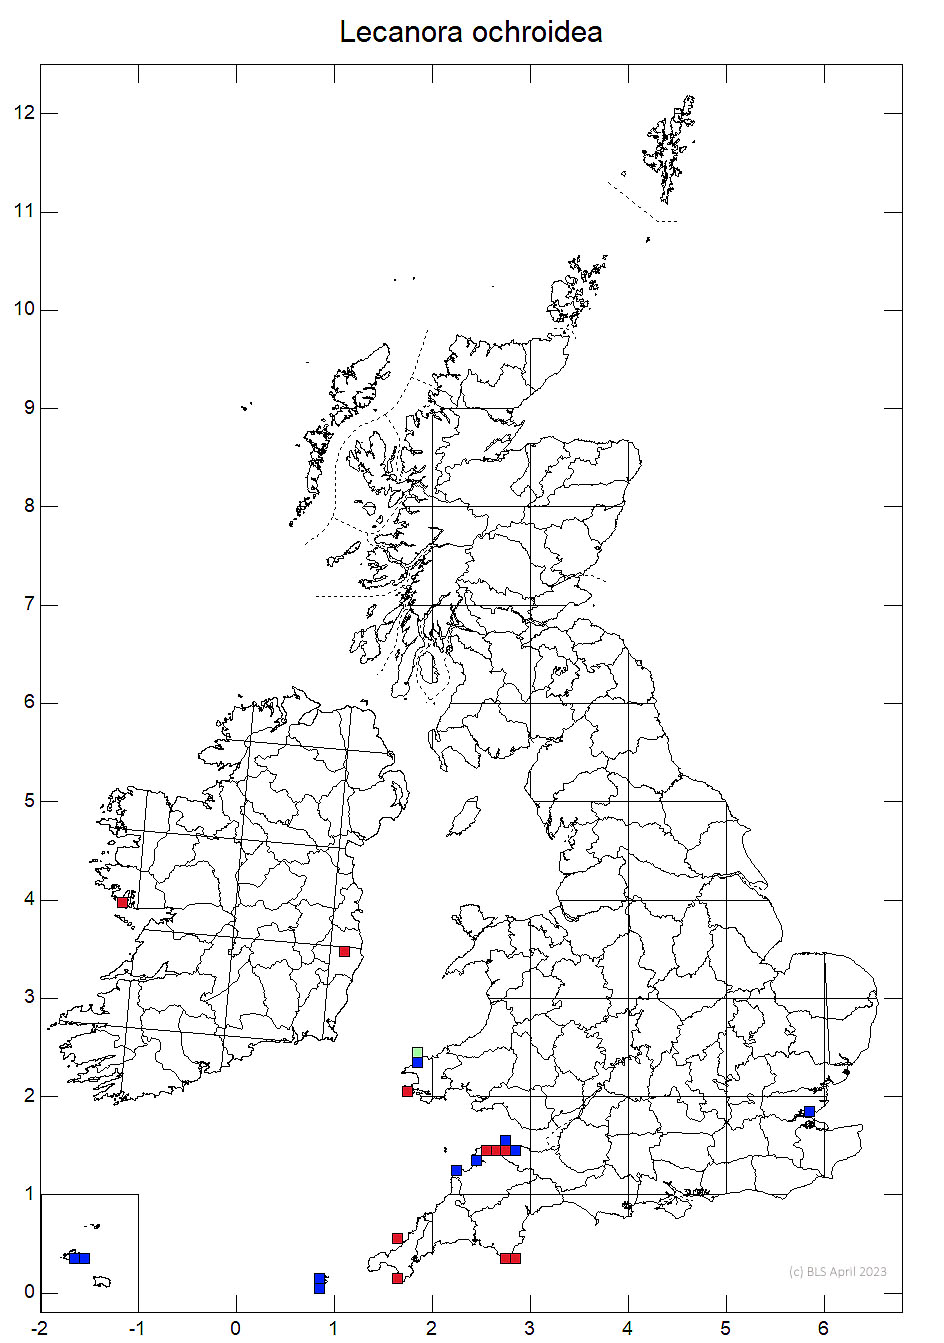 Lecanora ochroidea 10km sq distribution map